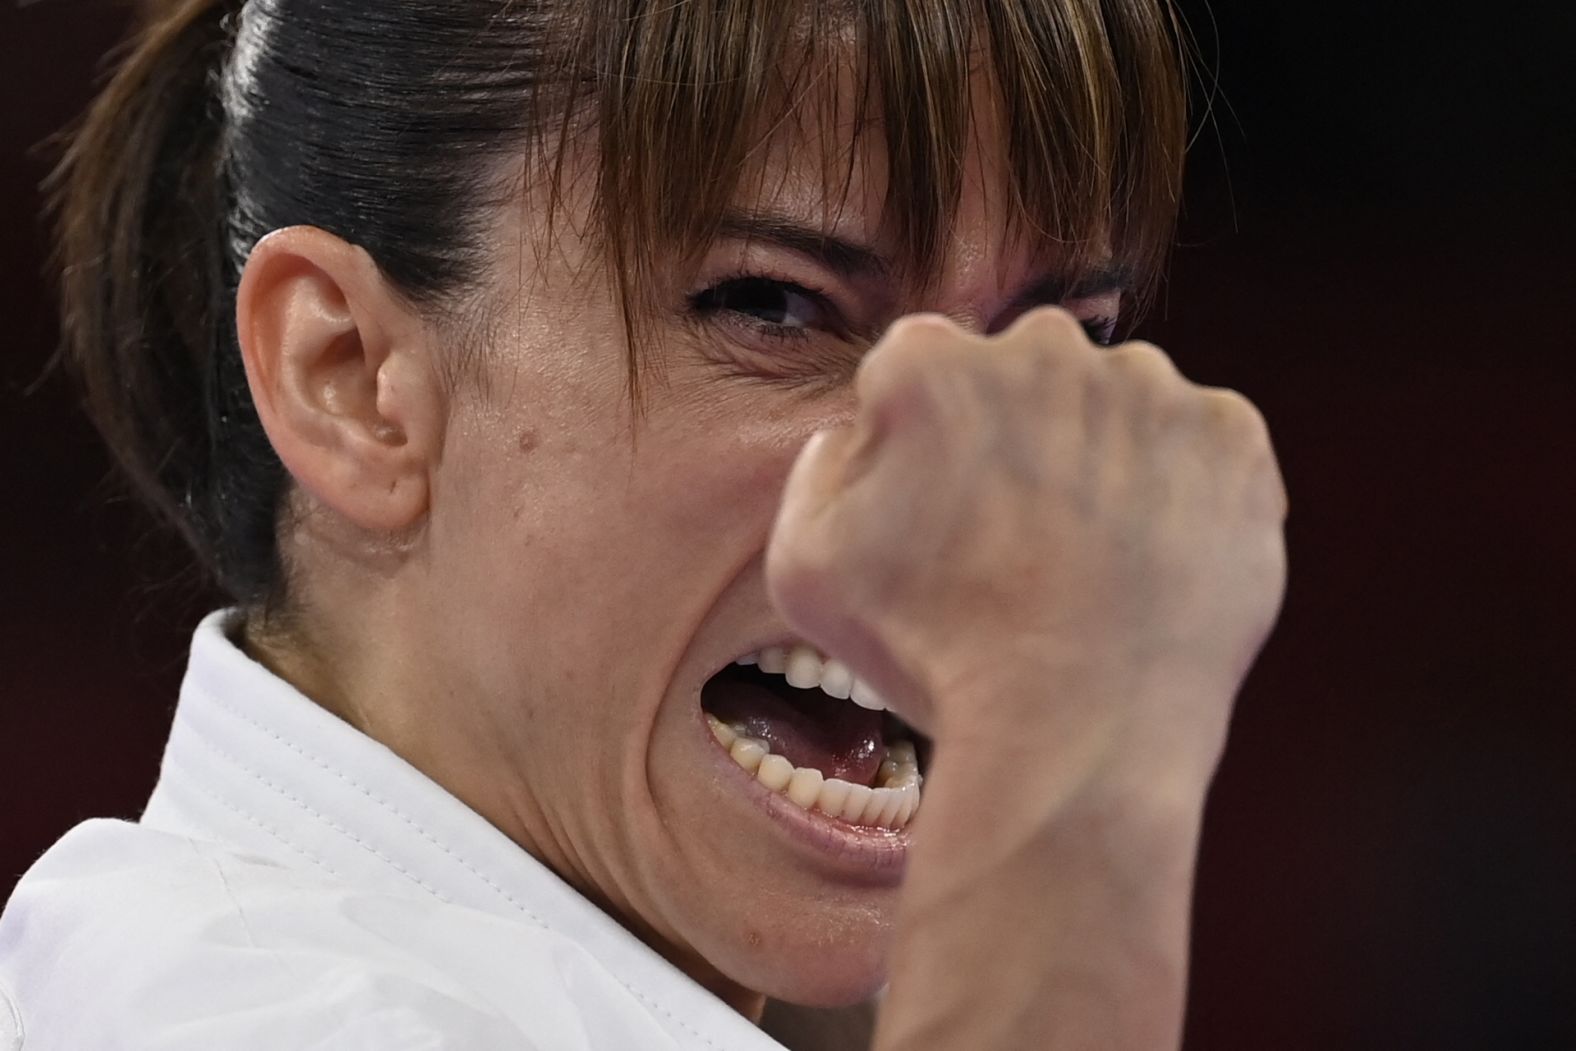 Spain's Sandra Sánchez <a href="index.php?page=&url=https%3A%2F%2Fwww.cnn.com%2Fworld%2Flive-news%2Ftokyo-2020-olympics-08-05-21-spt%2Fh_99e39c091abd8b5e3f489dffdd59da42" target="_blank">won gold in karate's kata event</a> on August 5.  